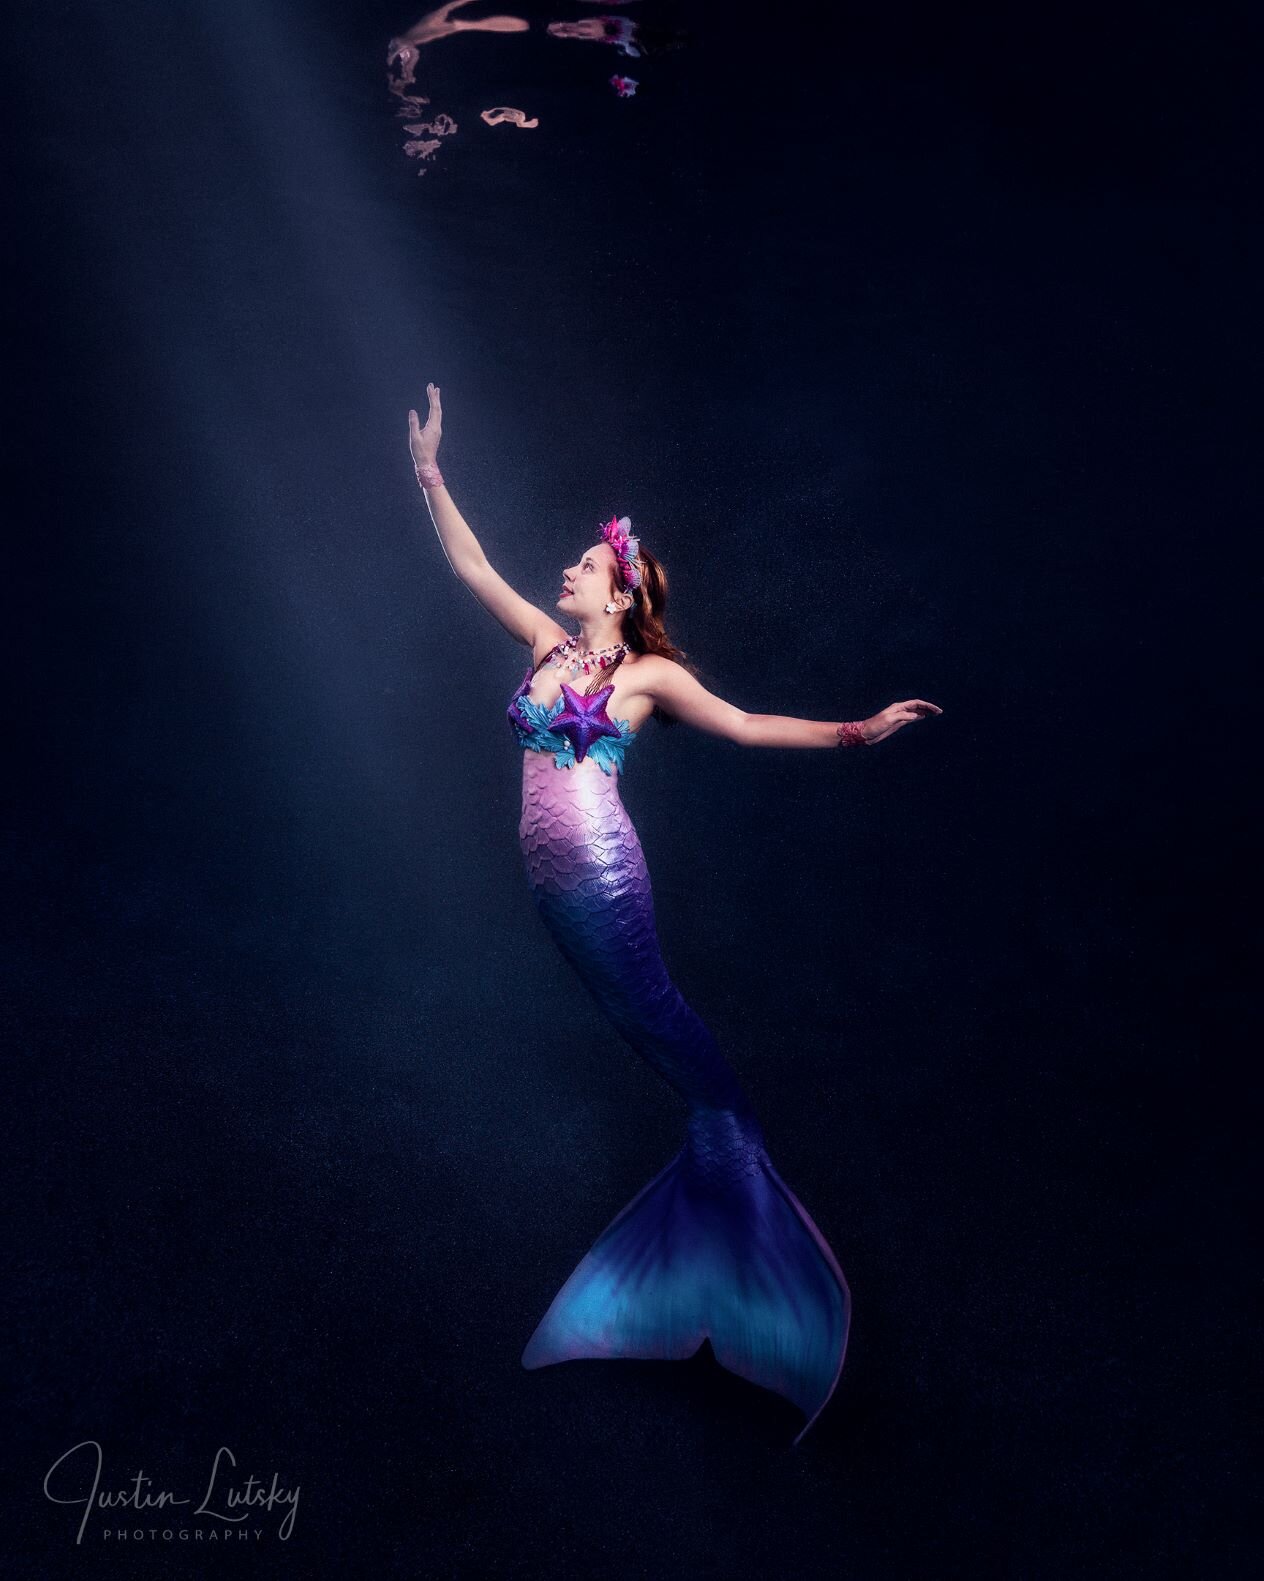 Mermaid Marina - Justin Lutsky Underwater Photo_med.jpg